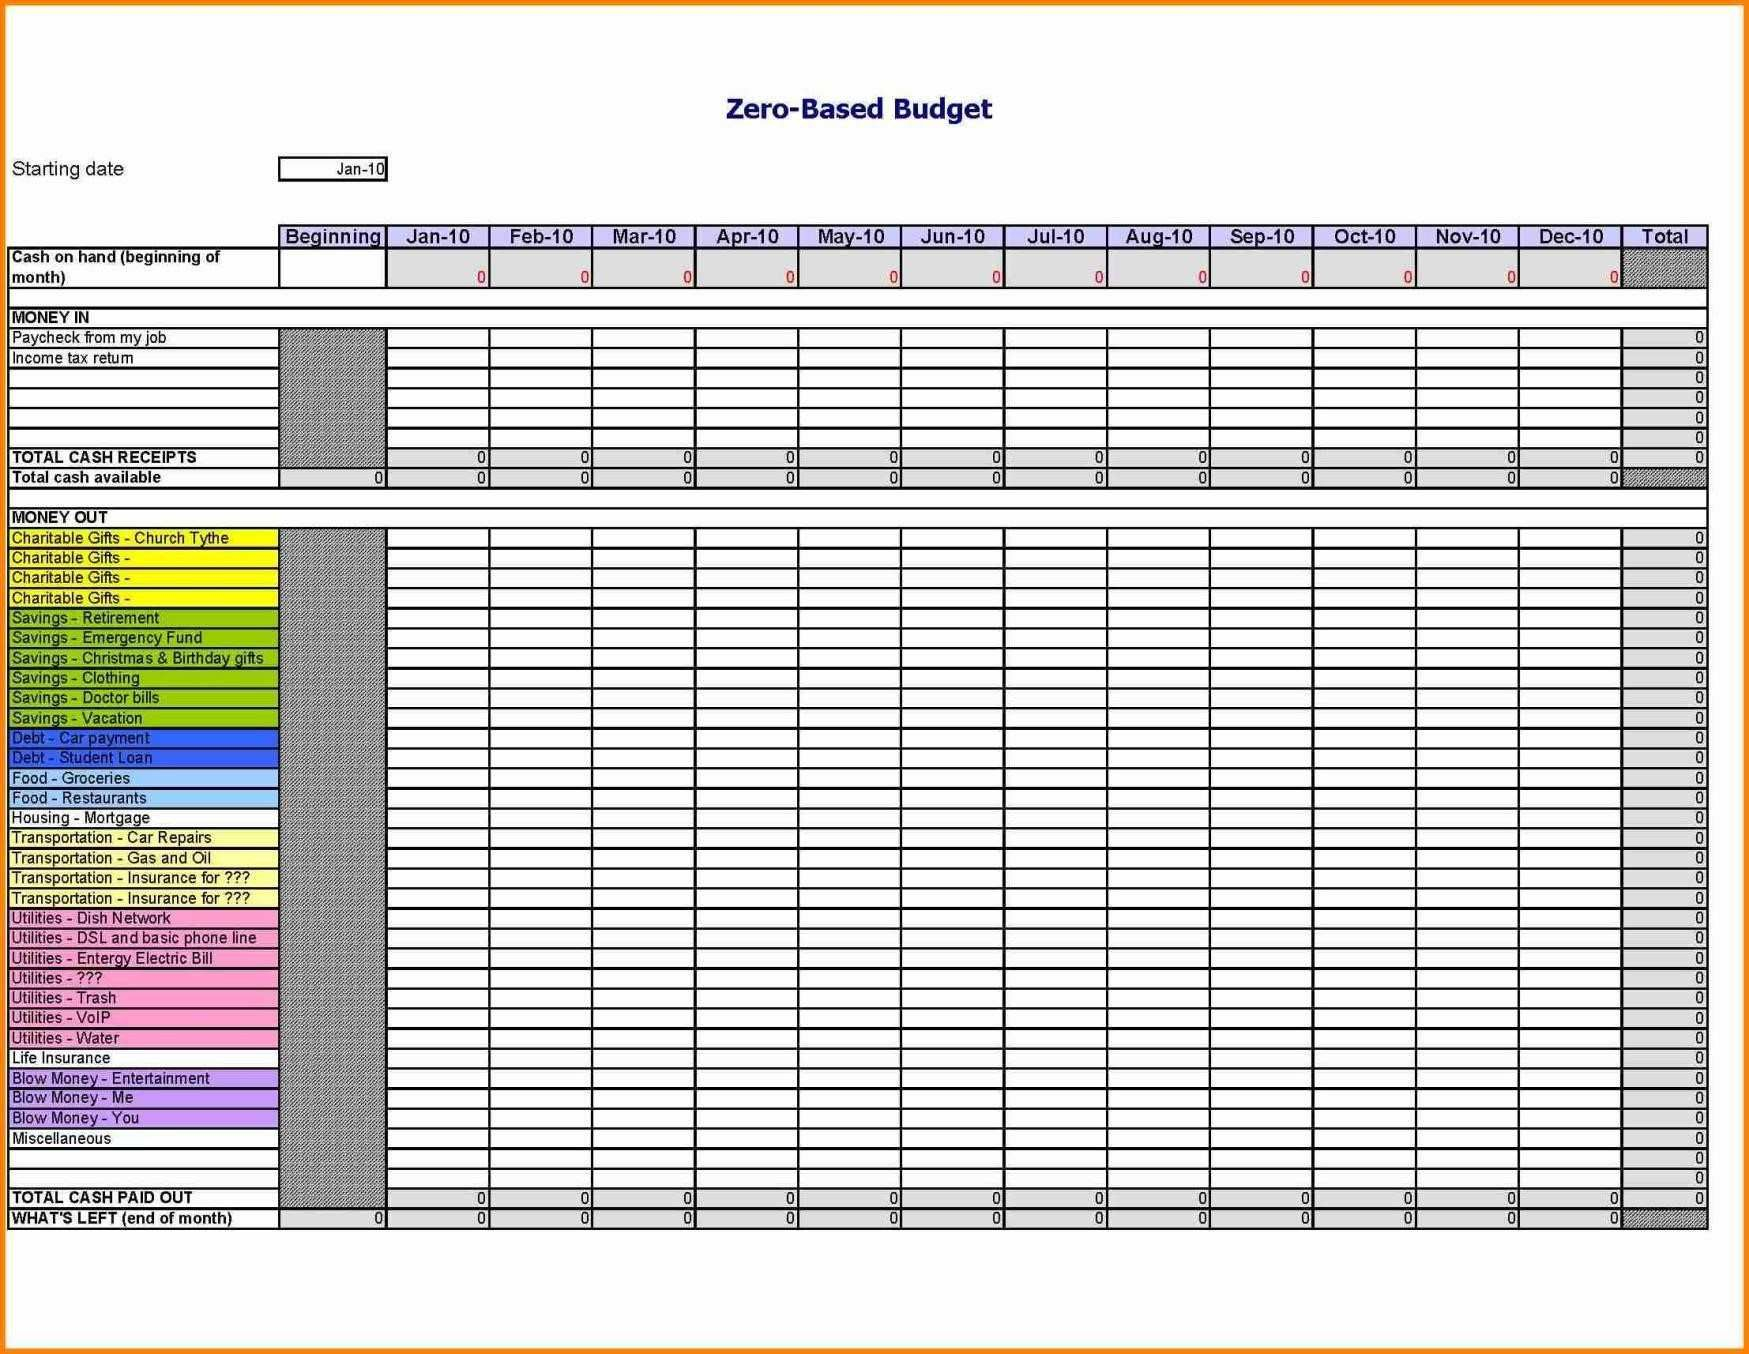 Dave Ramsey Budget Worksheet Excel - Printable Worksheet Template With Zero Based Budget Template For Business Within Zero Based Budget Template For Business